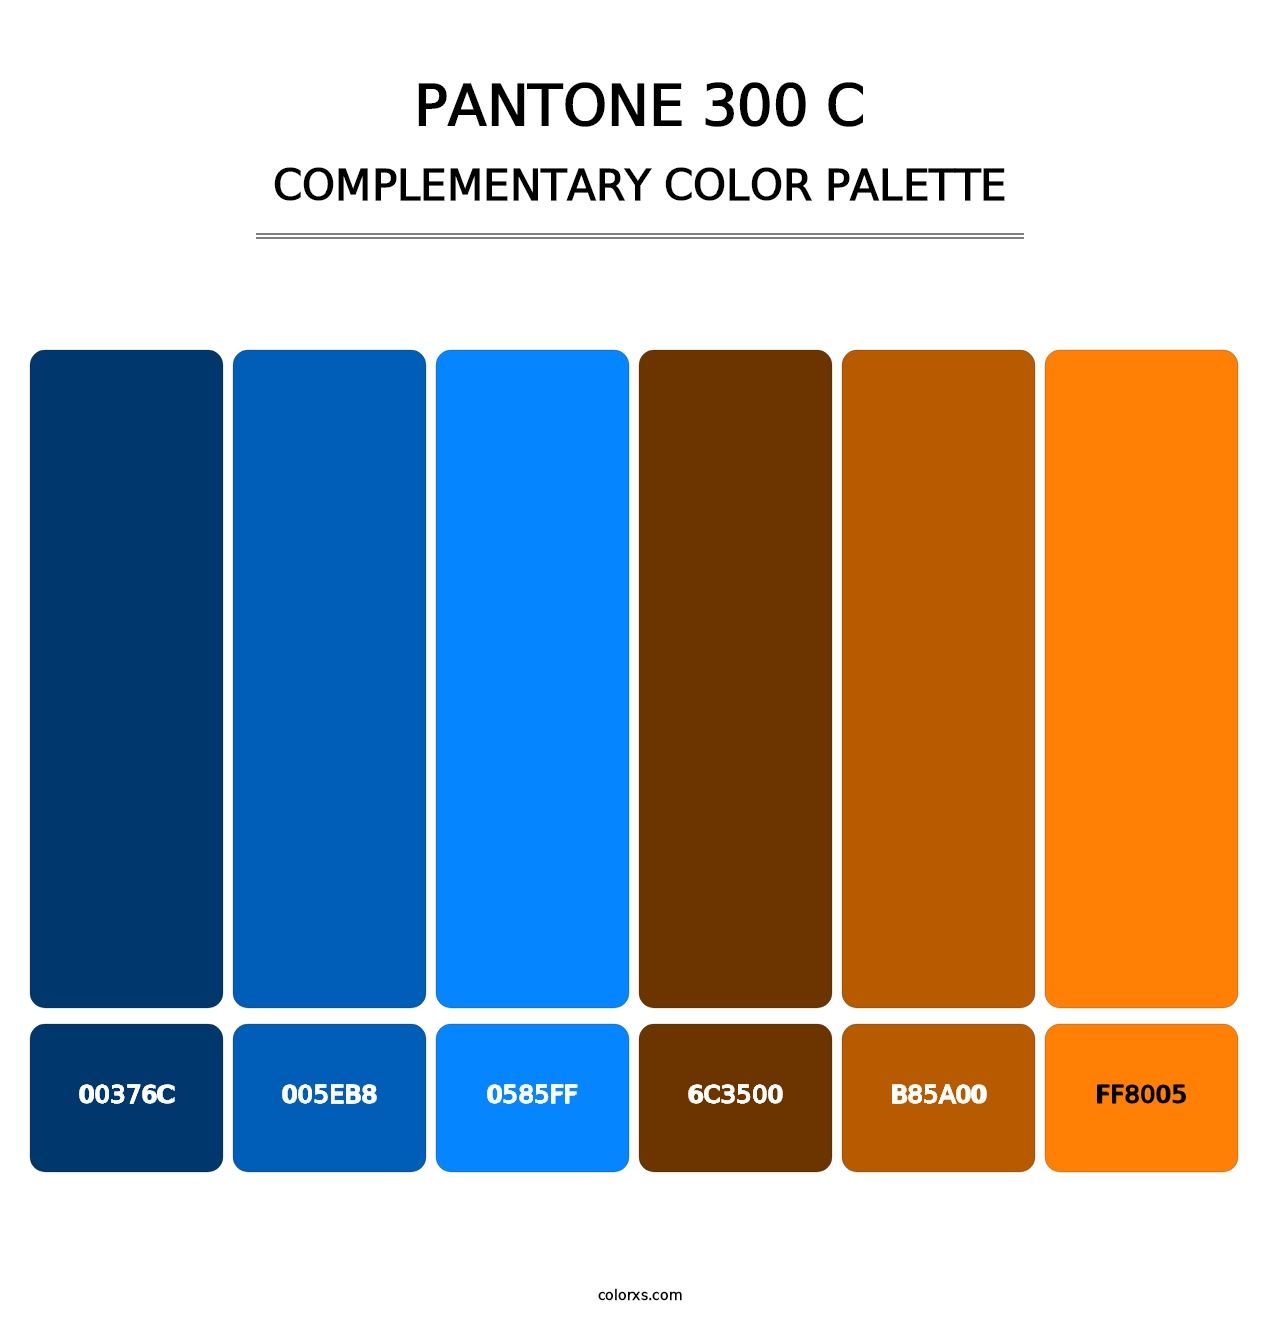 PANTONE 300 C - Complementary Color Palette